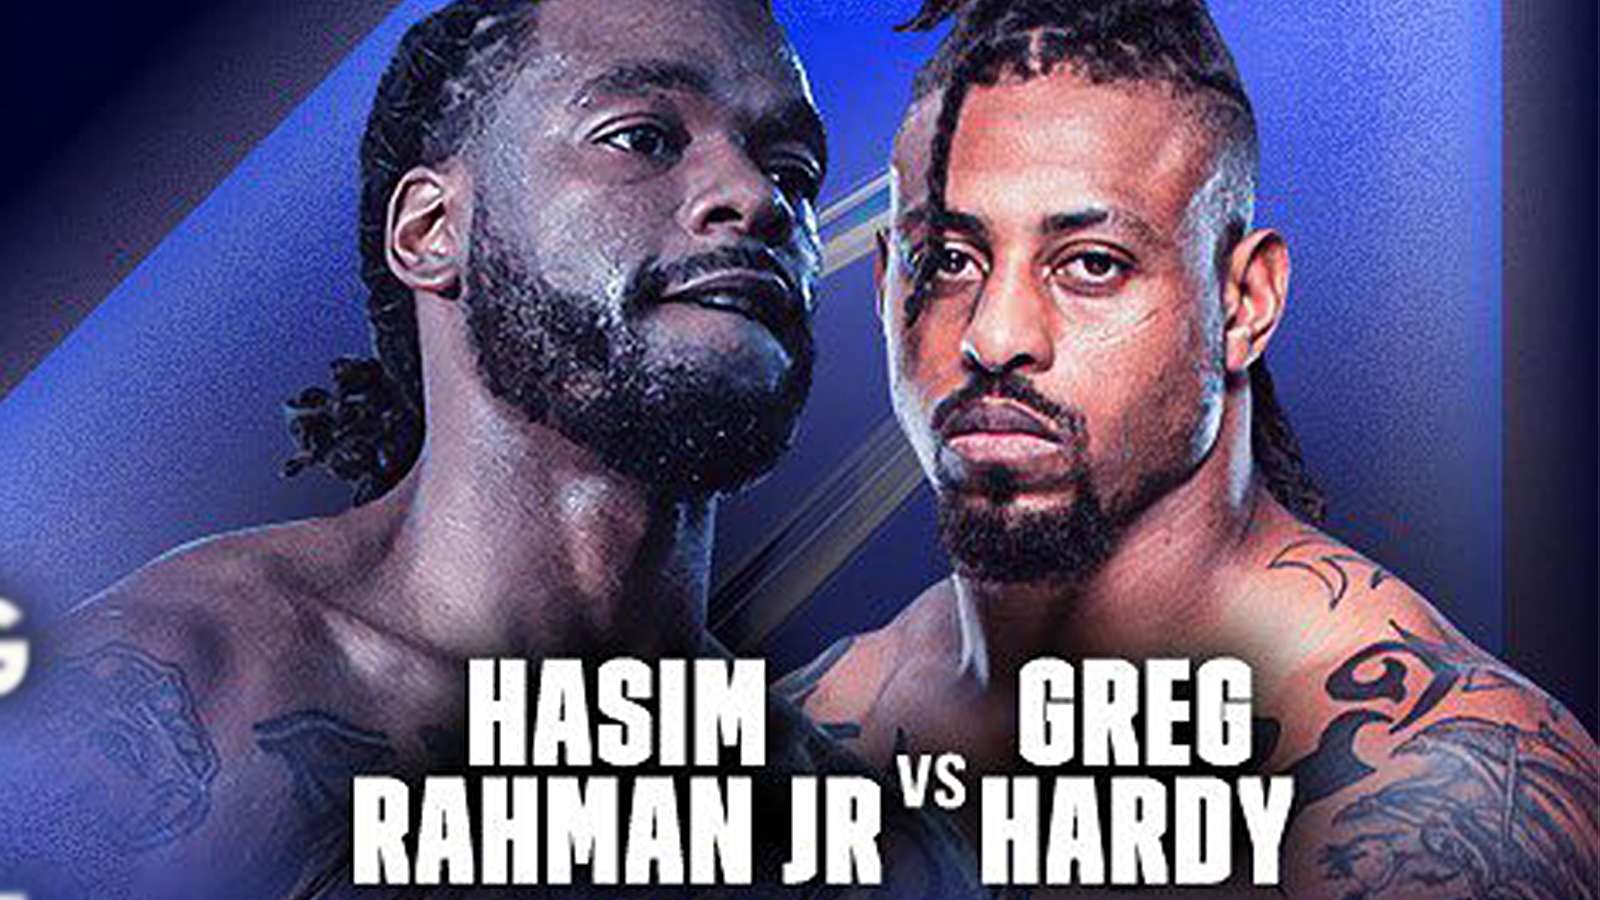 Misfts Dazn Hasim Rahman Jr vs Greg Hardy